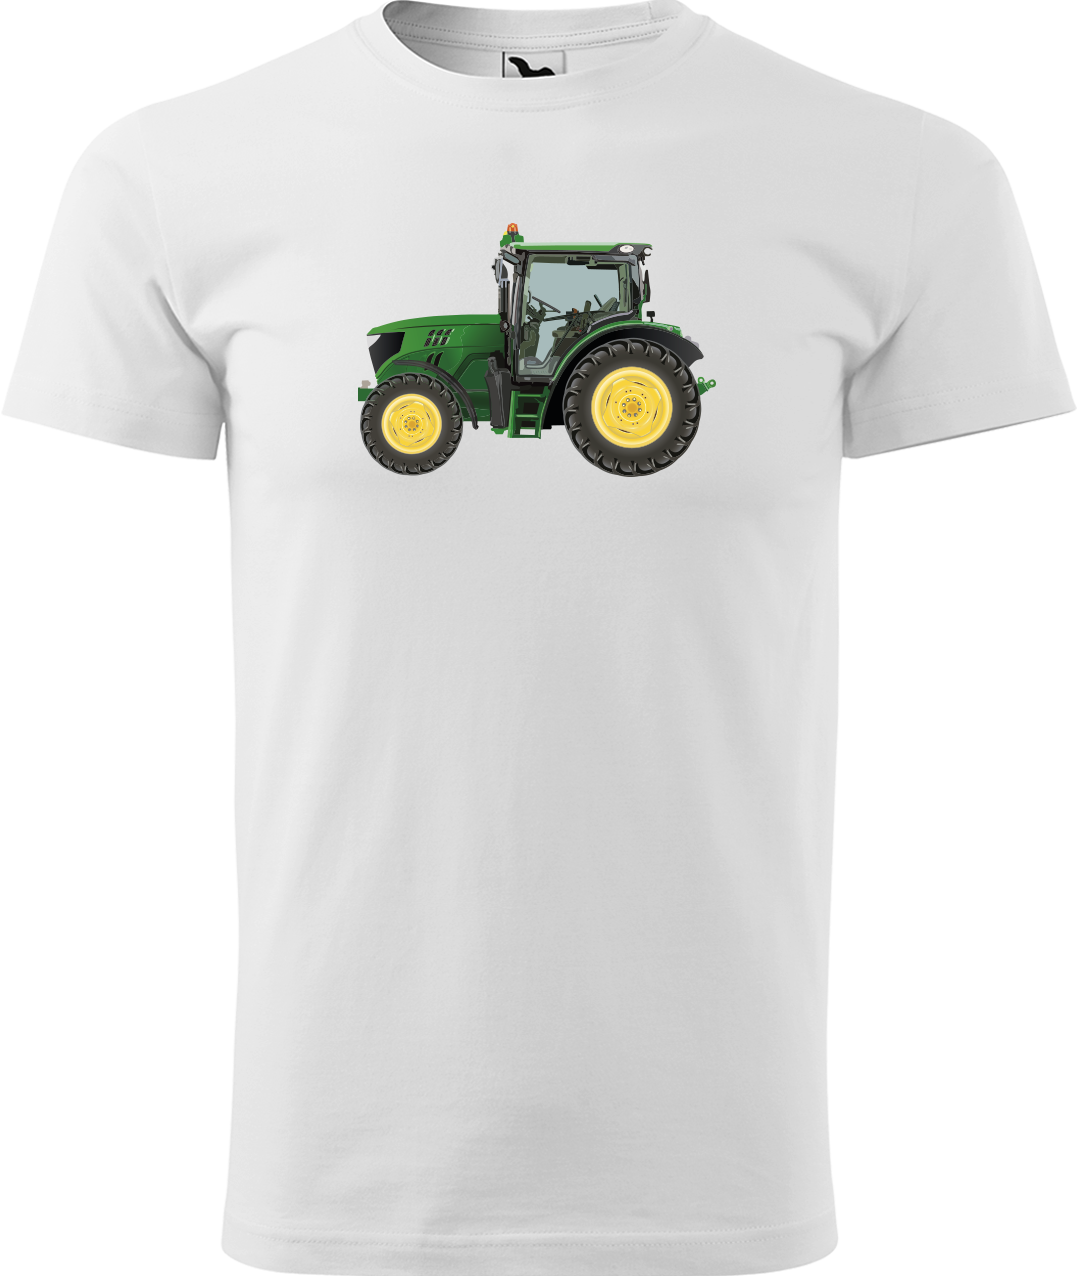 Tričko s traktorem - Zelený traktor Velikost: 4XL, Barva: Bílá (00)